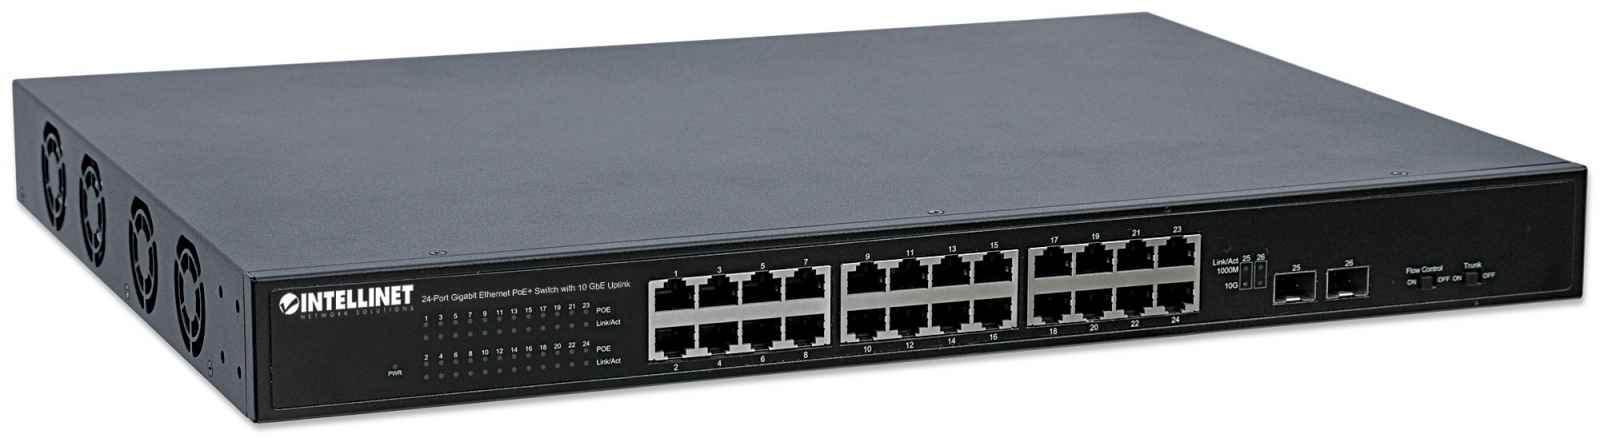 Maniobra Campo frijoles Intellinet Switch de 24 puertos Gigabit Ethernet PoE+ con enlace a 10 GbE  (561143)